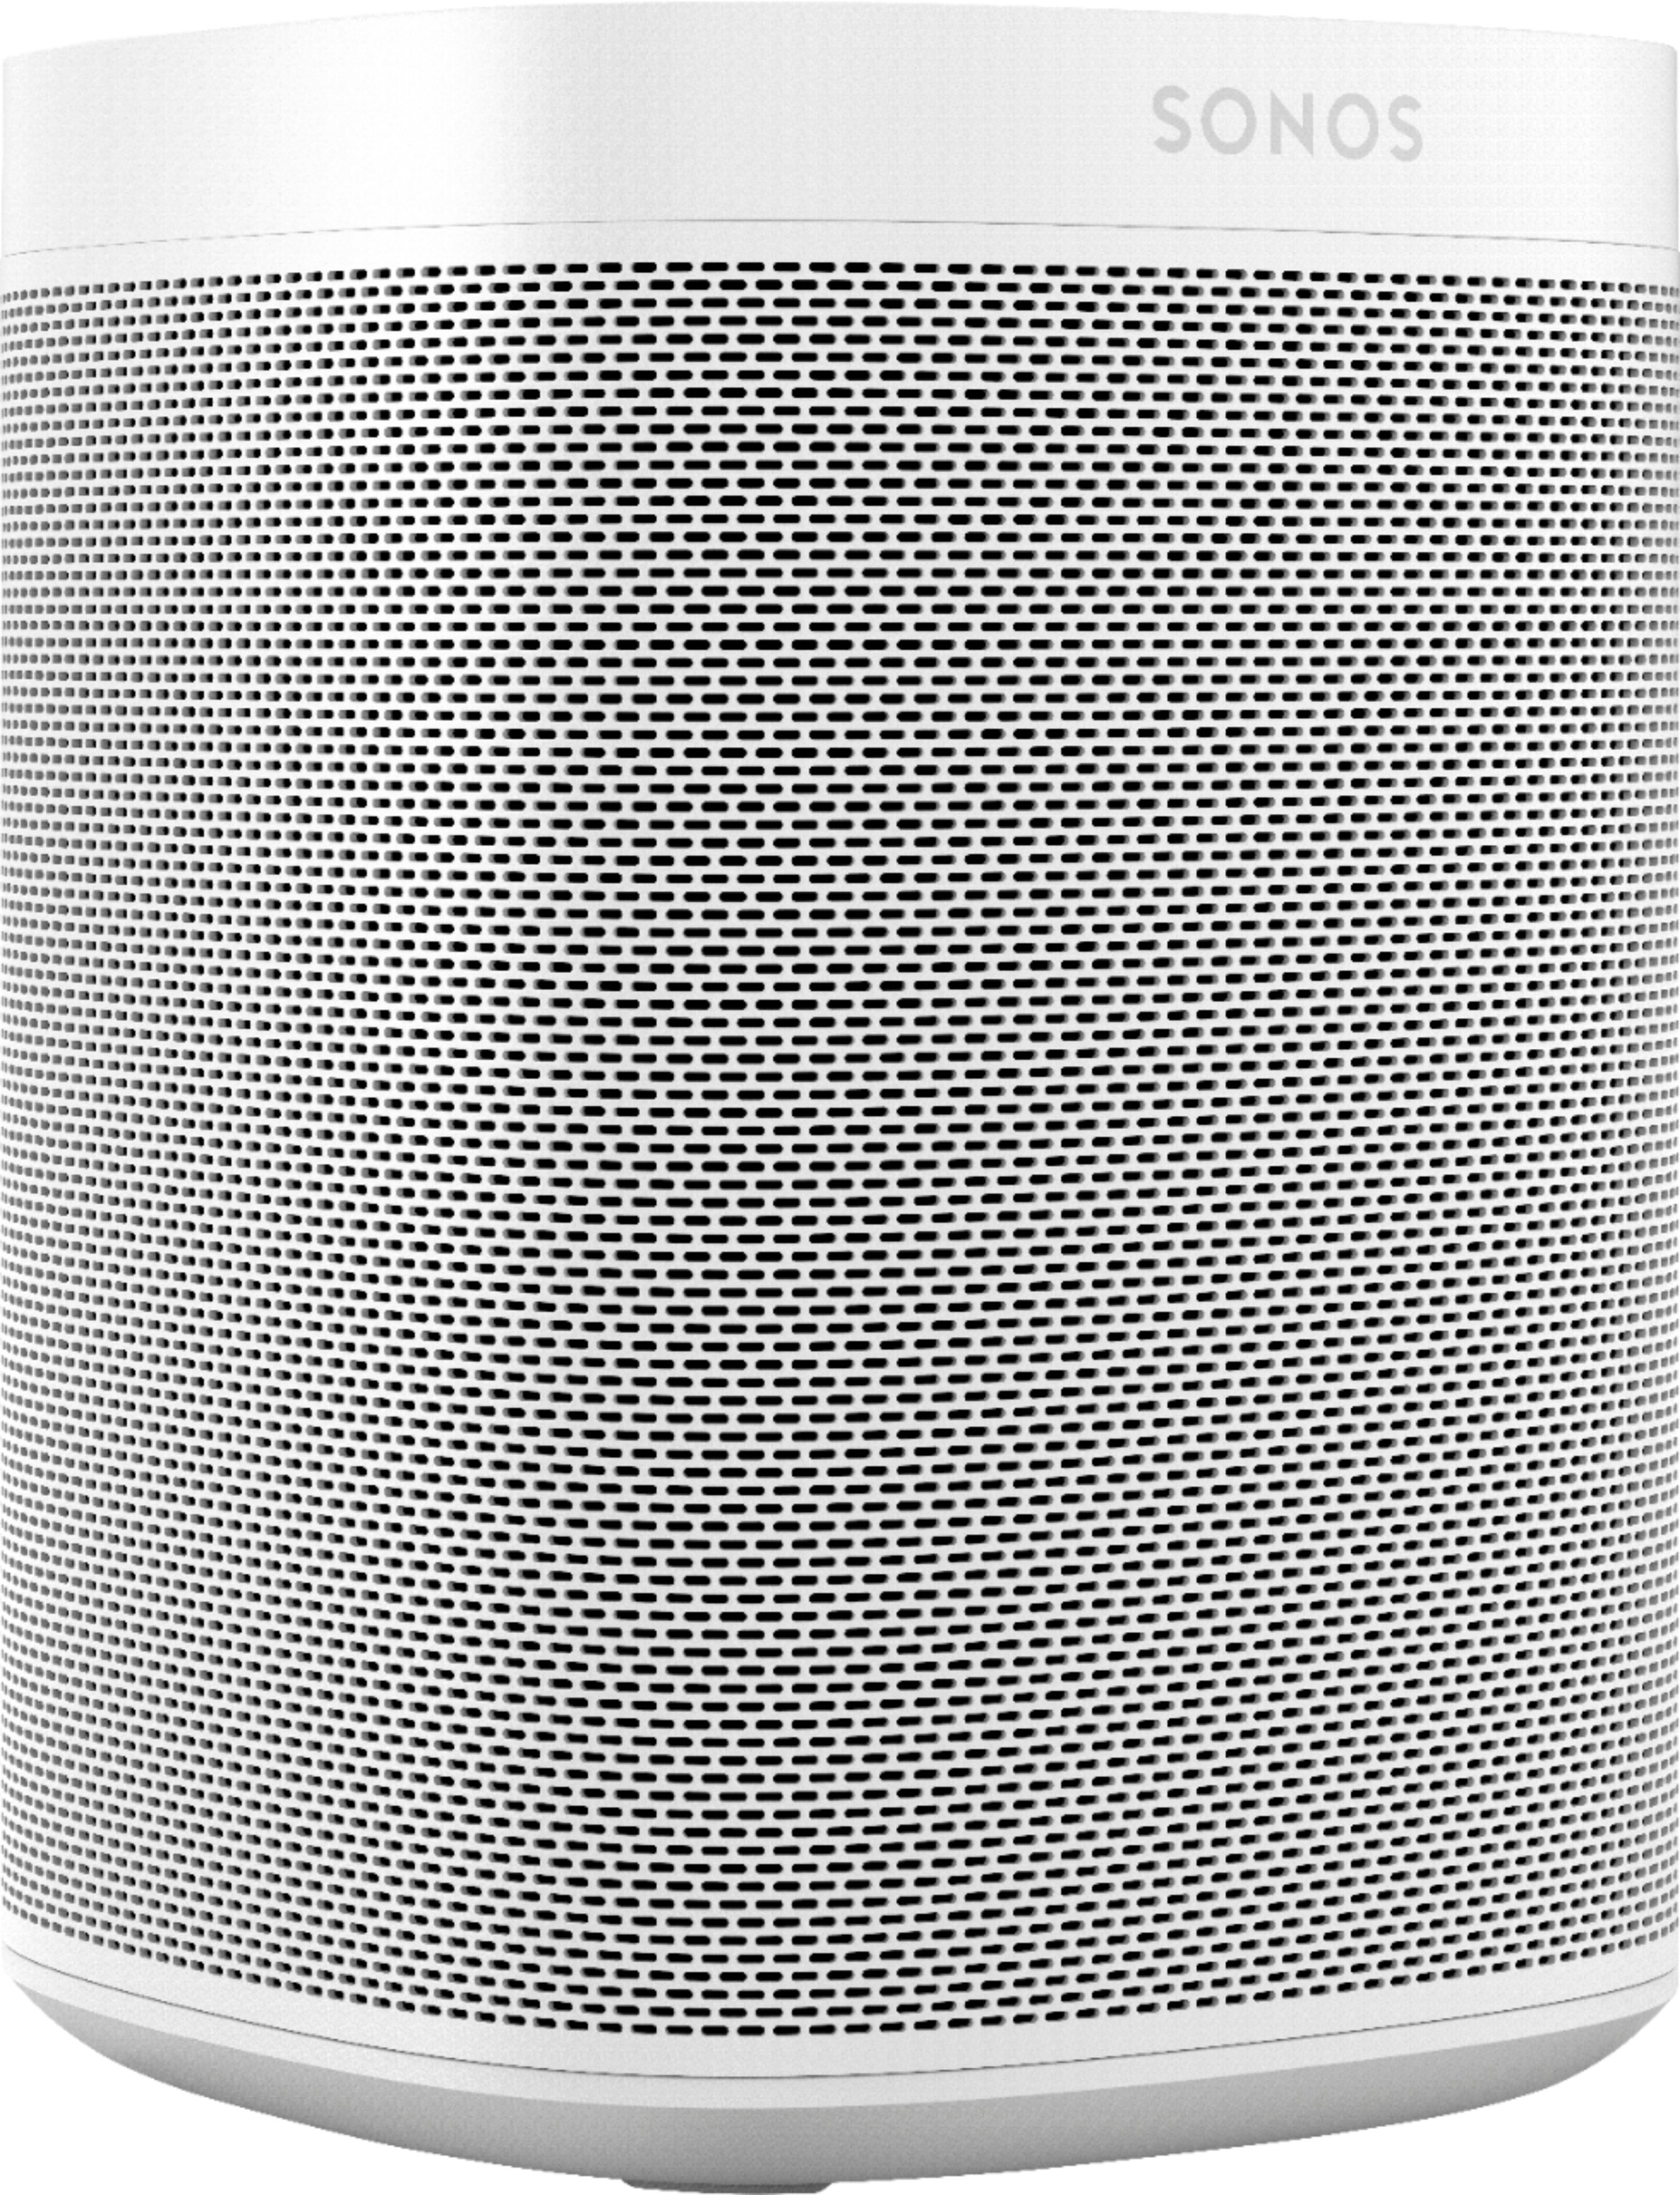 Angle View: Sonos - One SL Wireless Smart Speaker - White